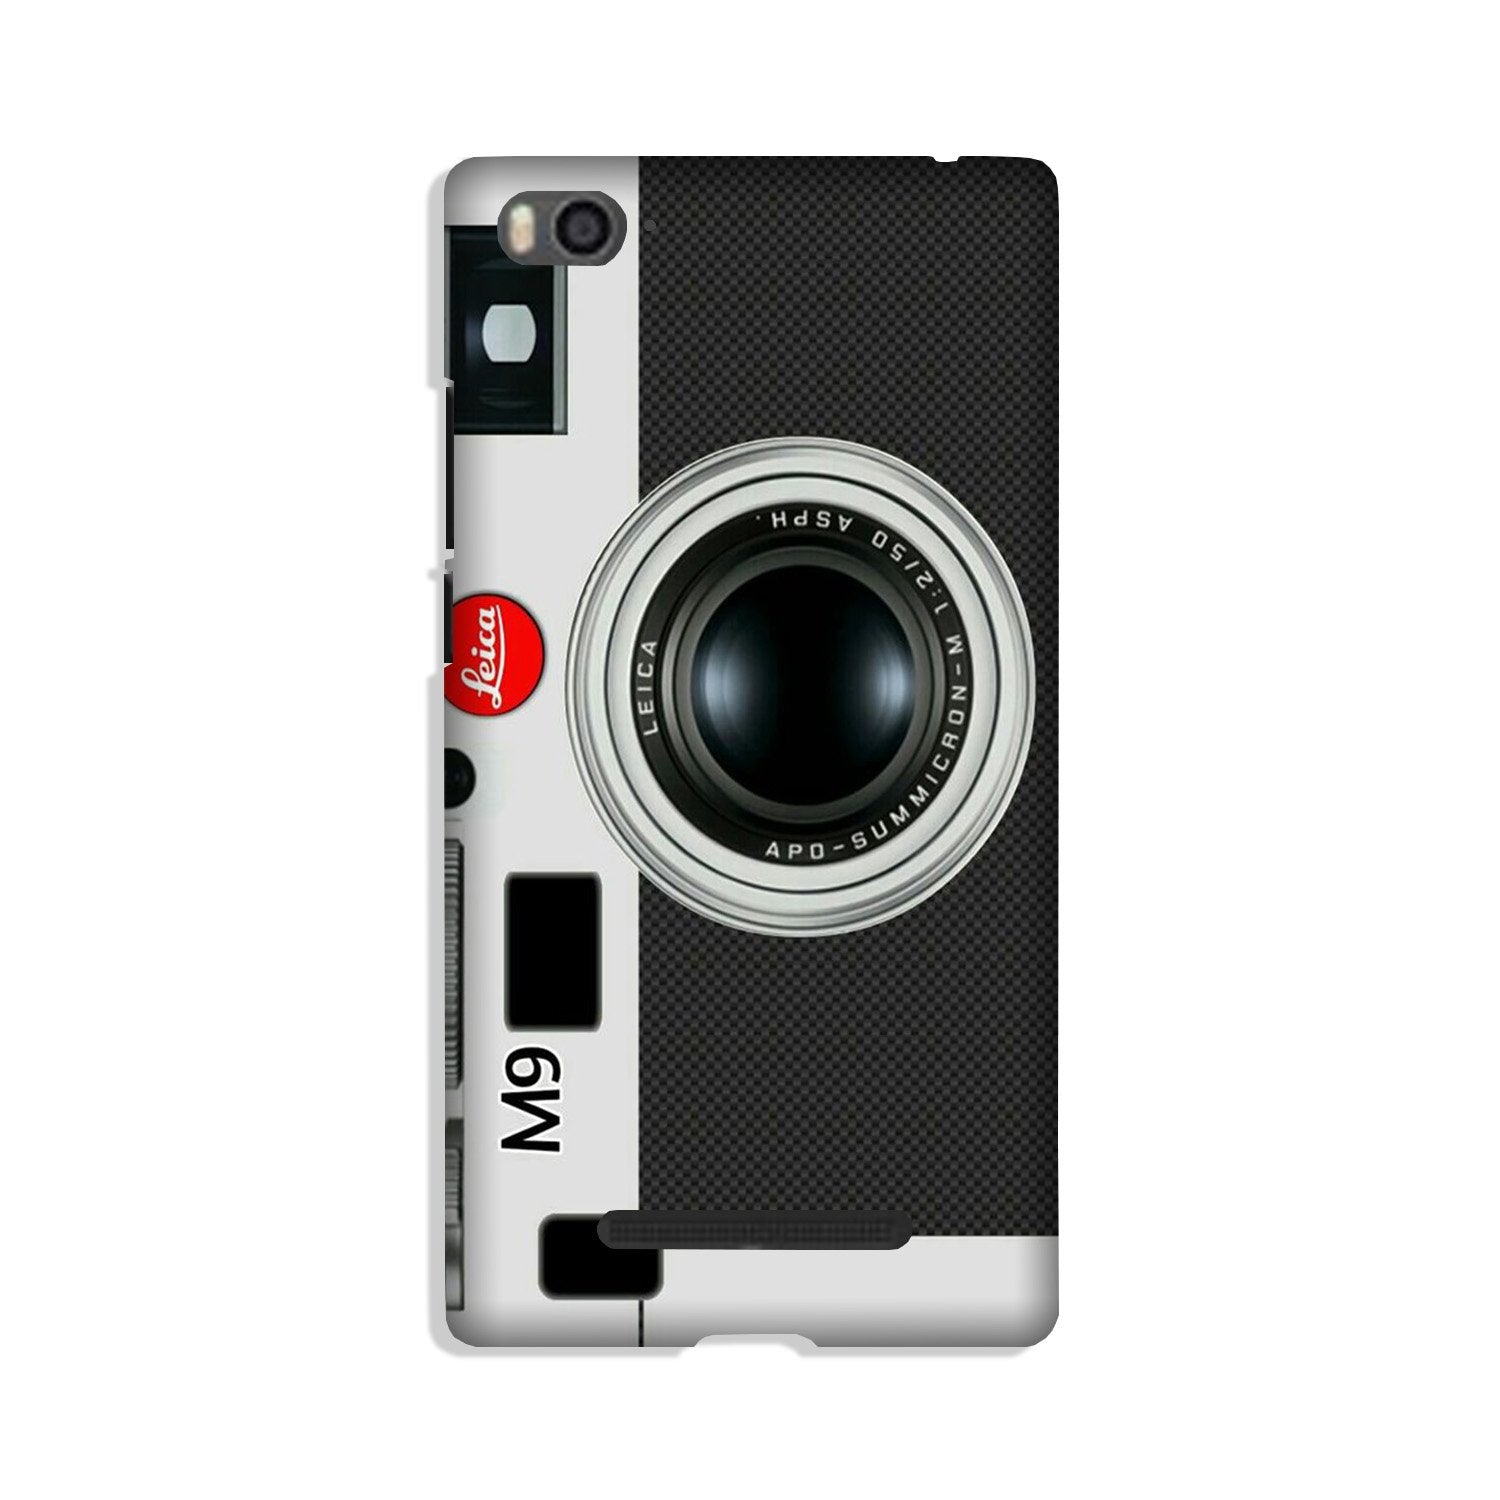 Camera Case for Xiaomi Mi 4i (Design No. 257)